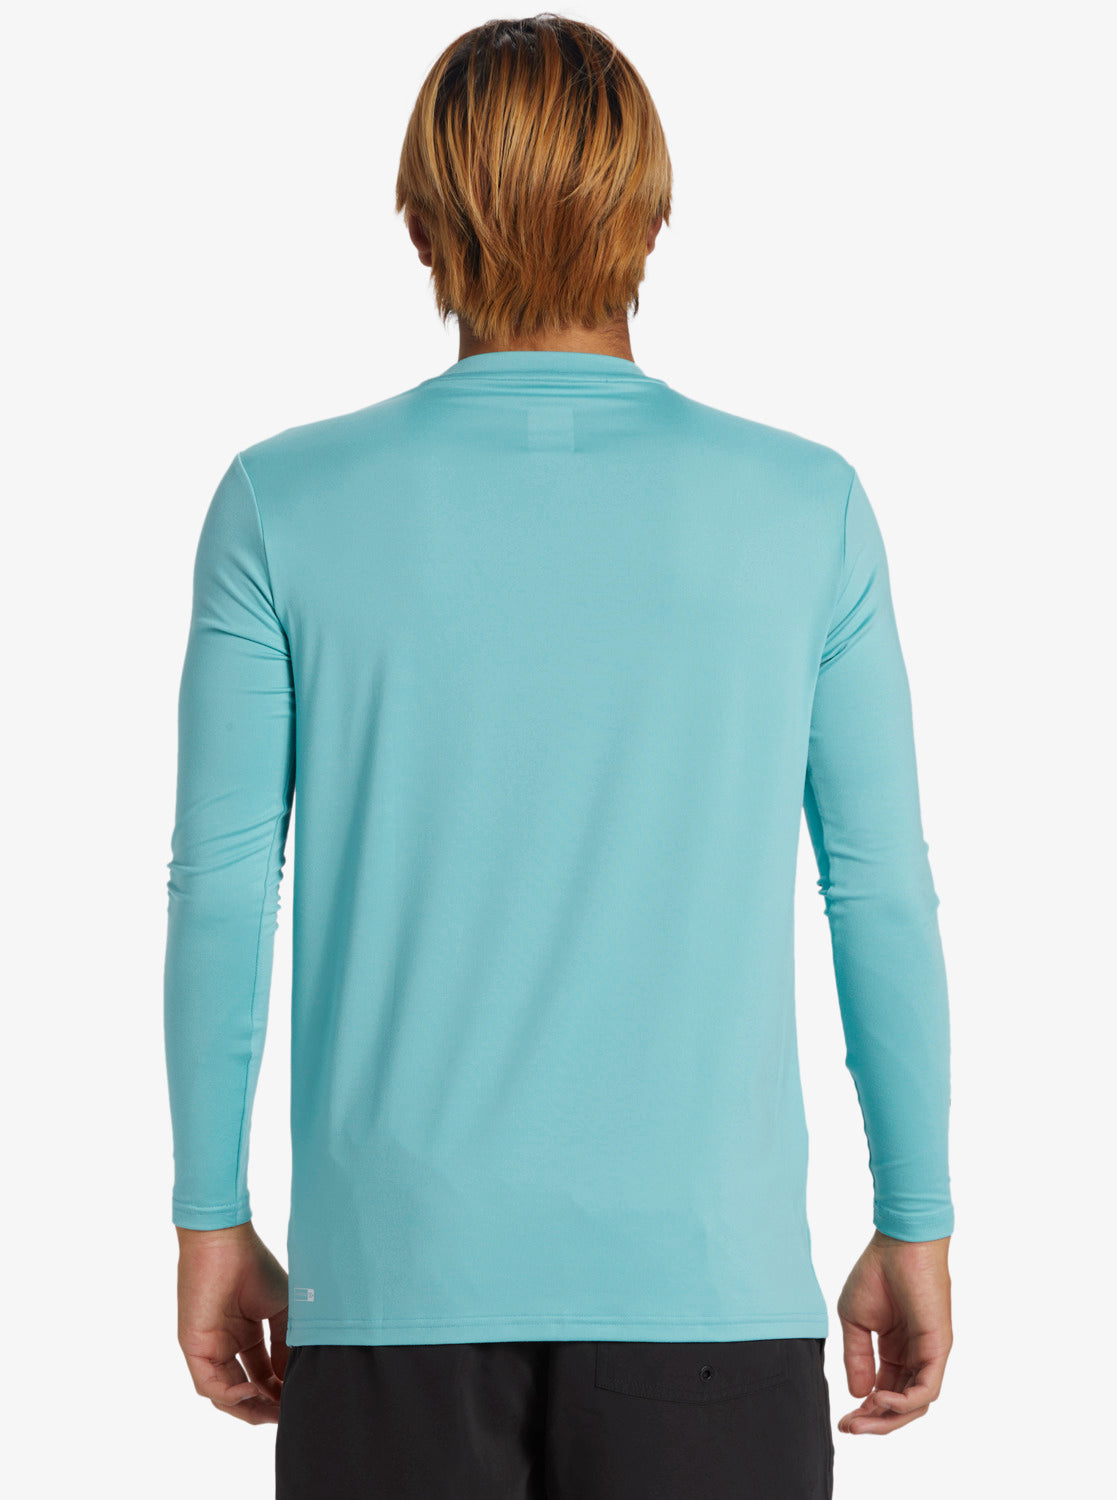 Quiksilver Everyday Surf Long-Sleeve T-Shirt - Men's Marine Blue, XL